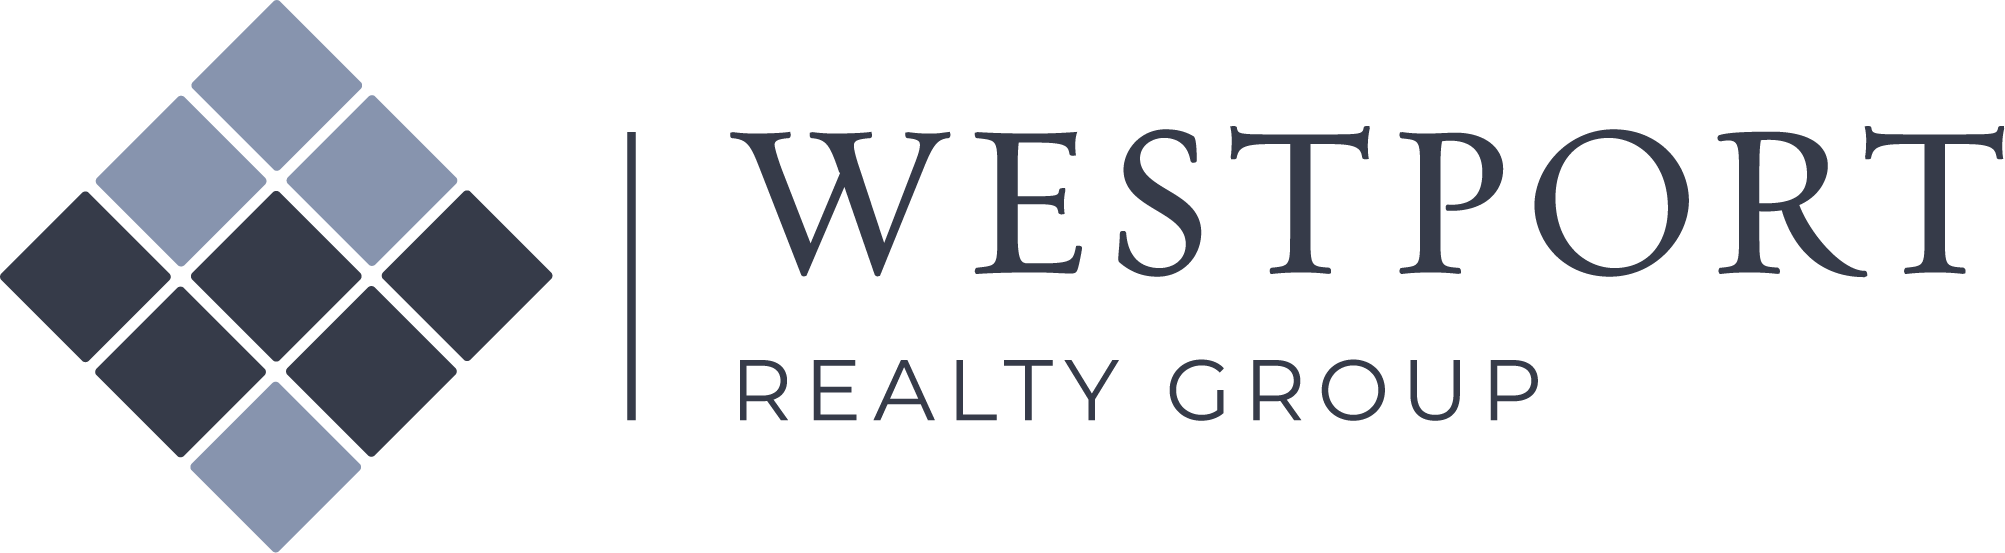 Westport Realty Logo_New.png